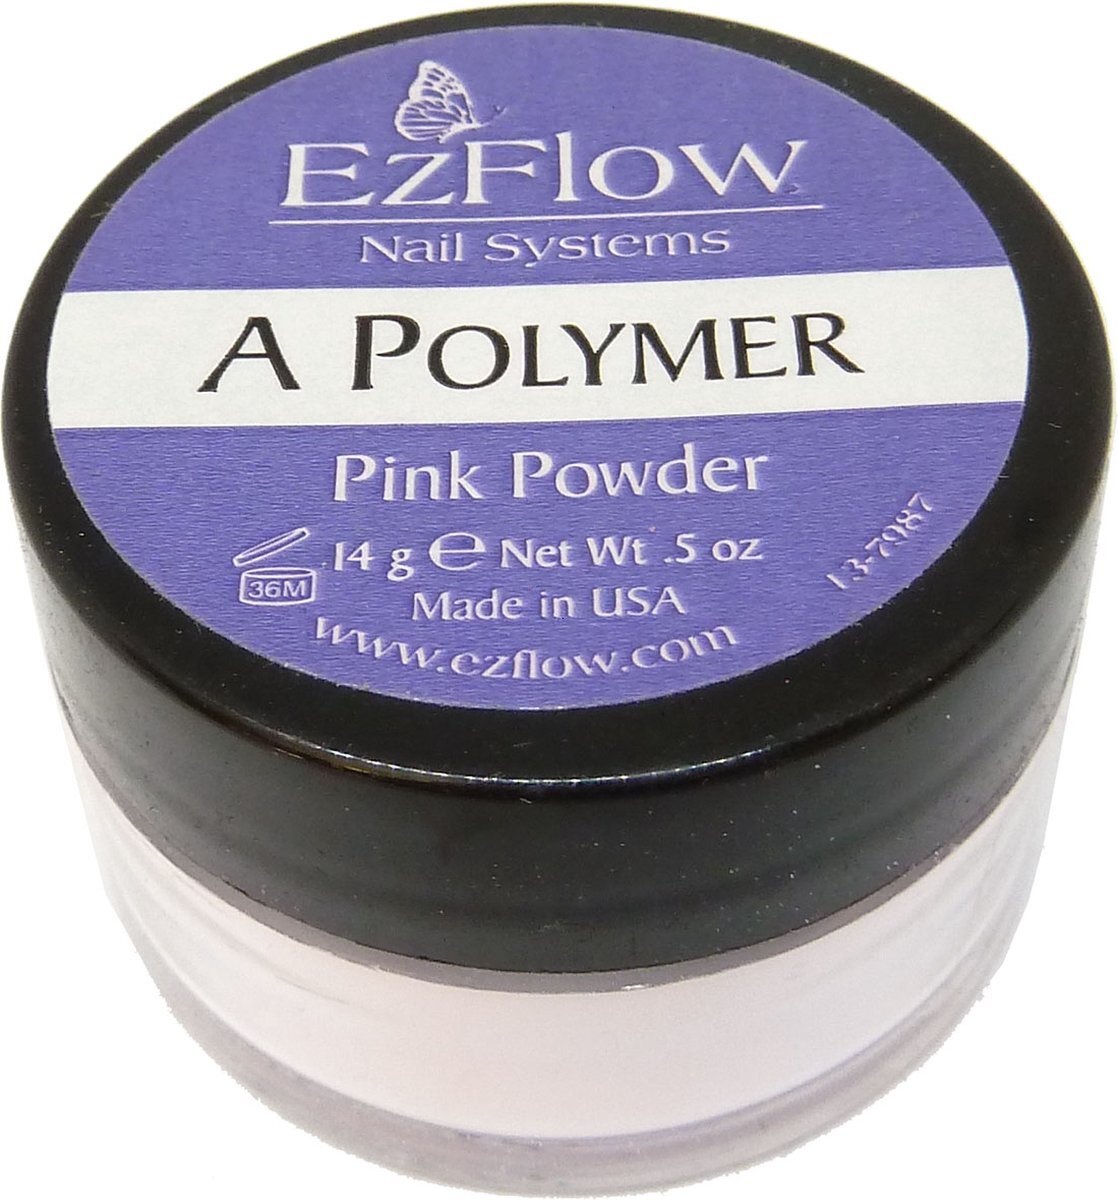 ezflow Ez Flow A Polymer Powder Acrylpoeder Manicure Nail Art Nagelverzorging 14g - Pink Powder Pink Powder